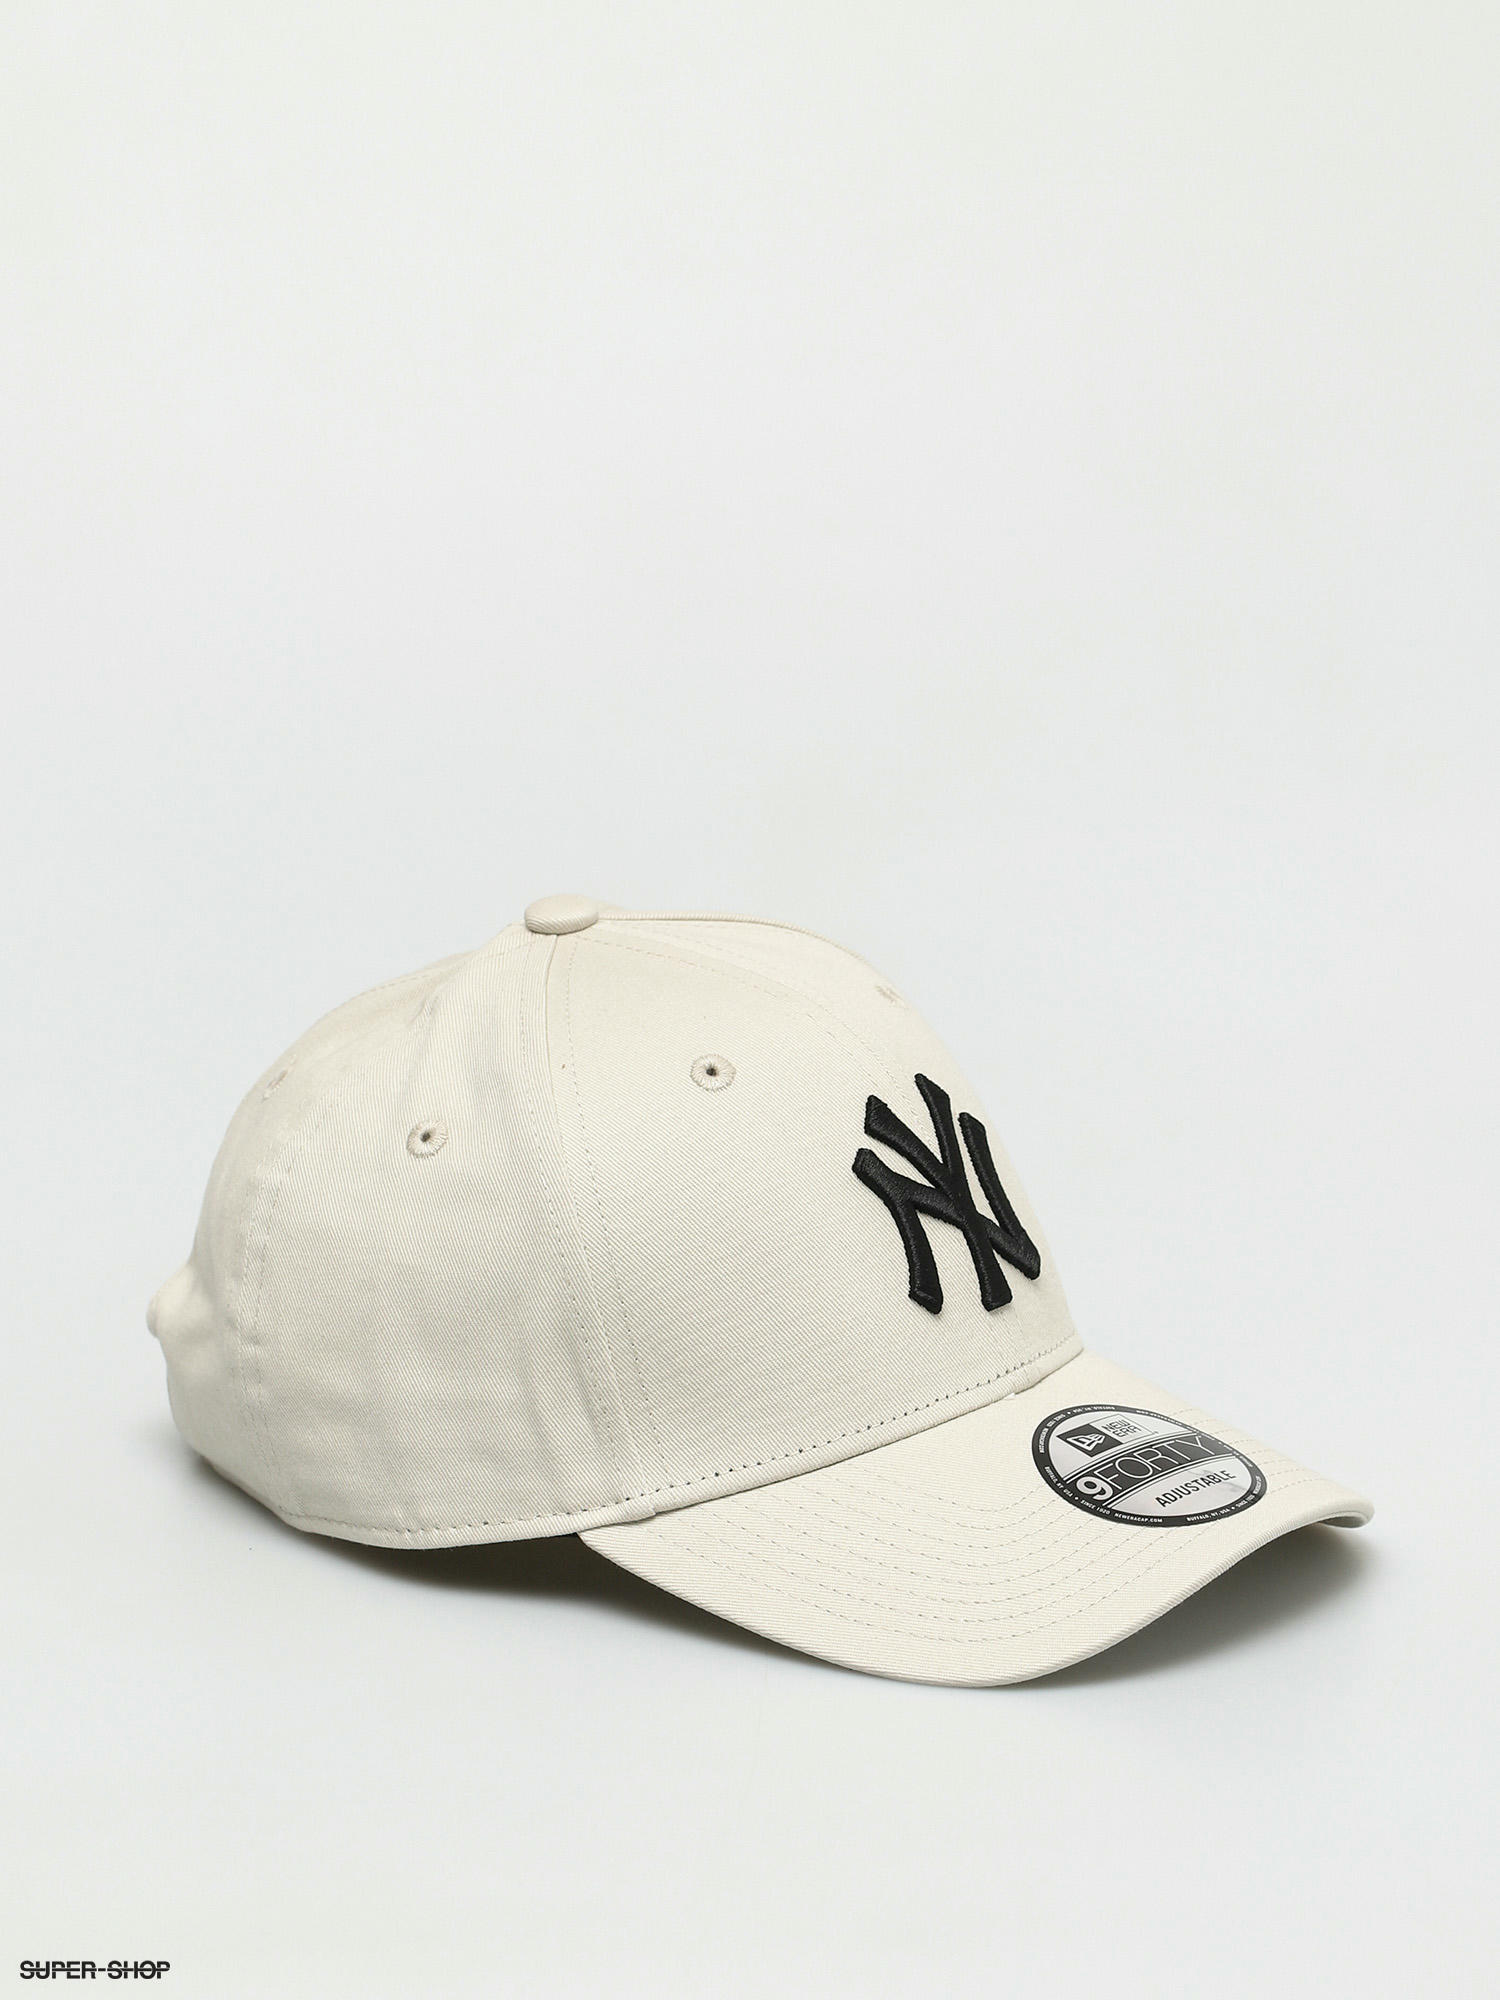 New York yankees cap Strapback hat 9forty new era, Men's Fashion